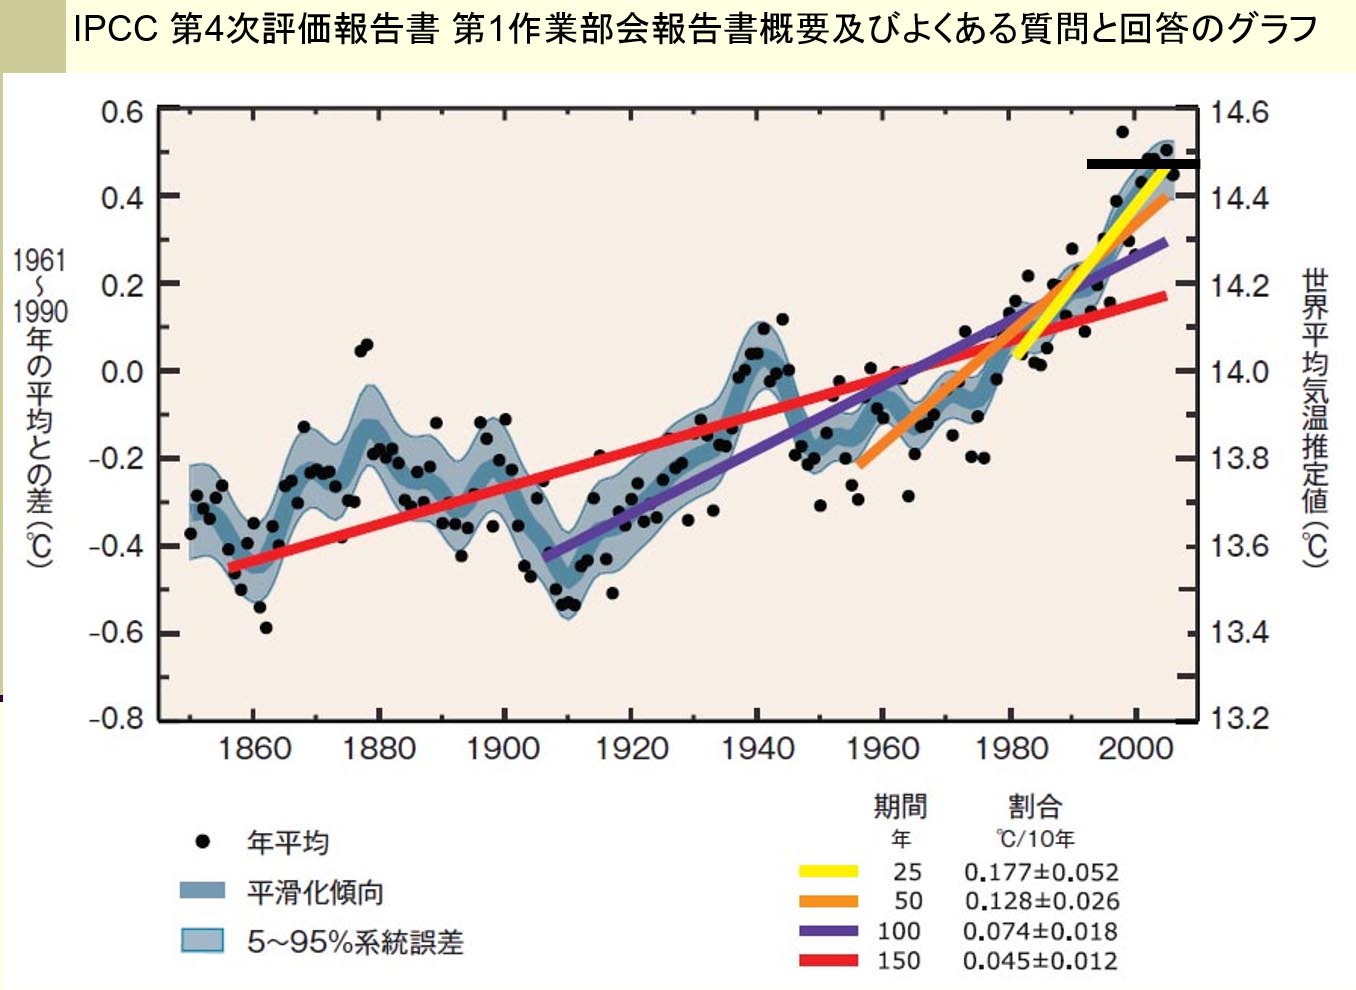 IPCC_Graph.jpg